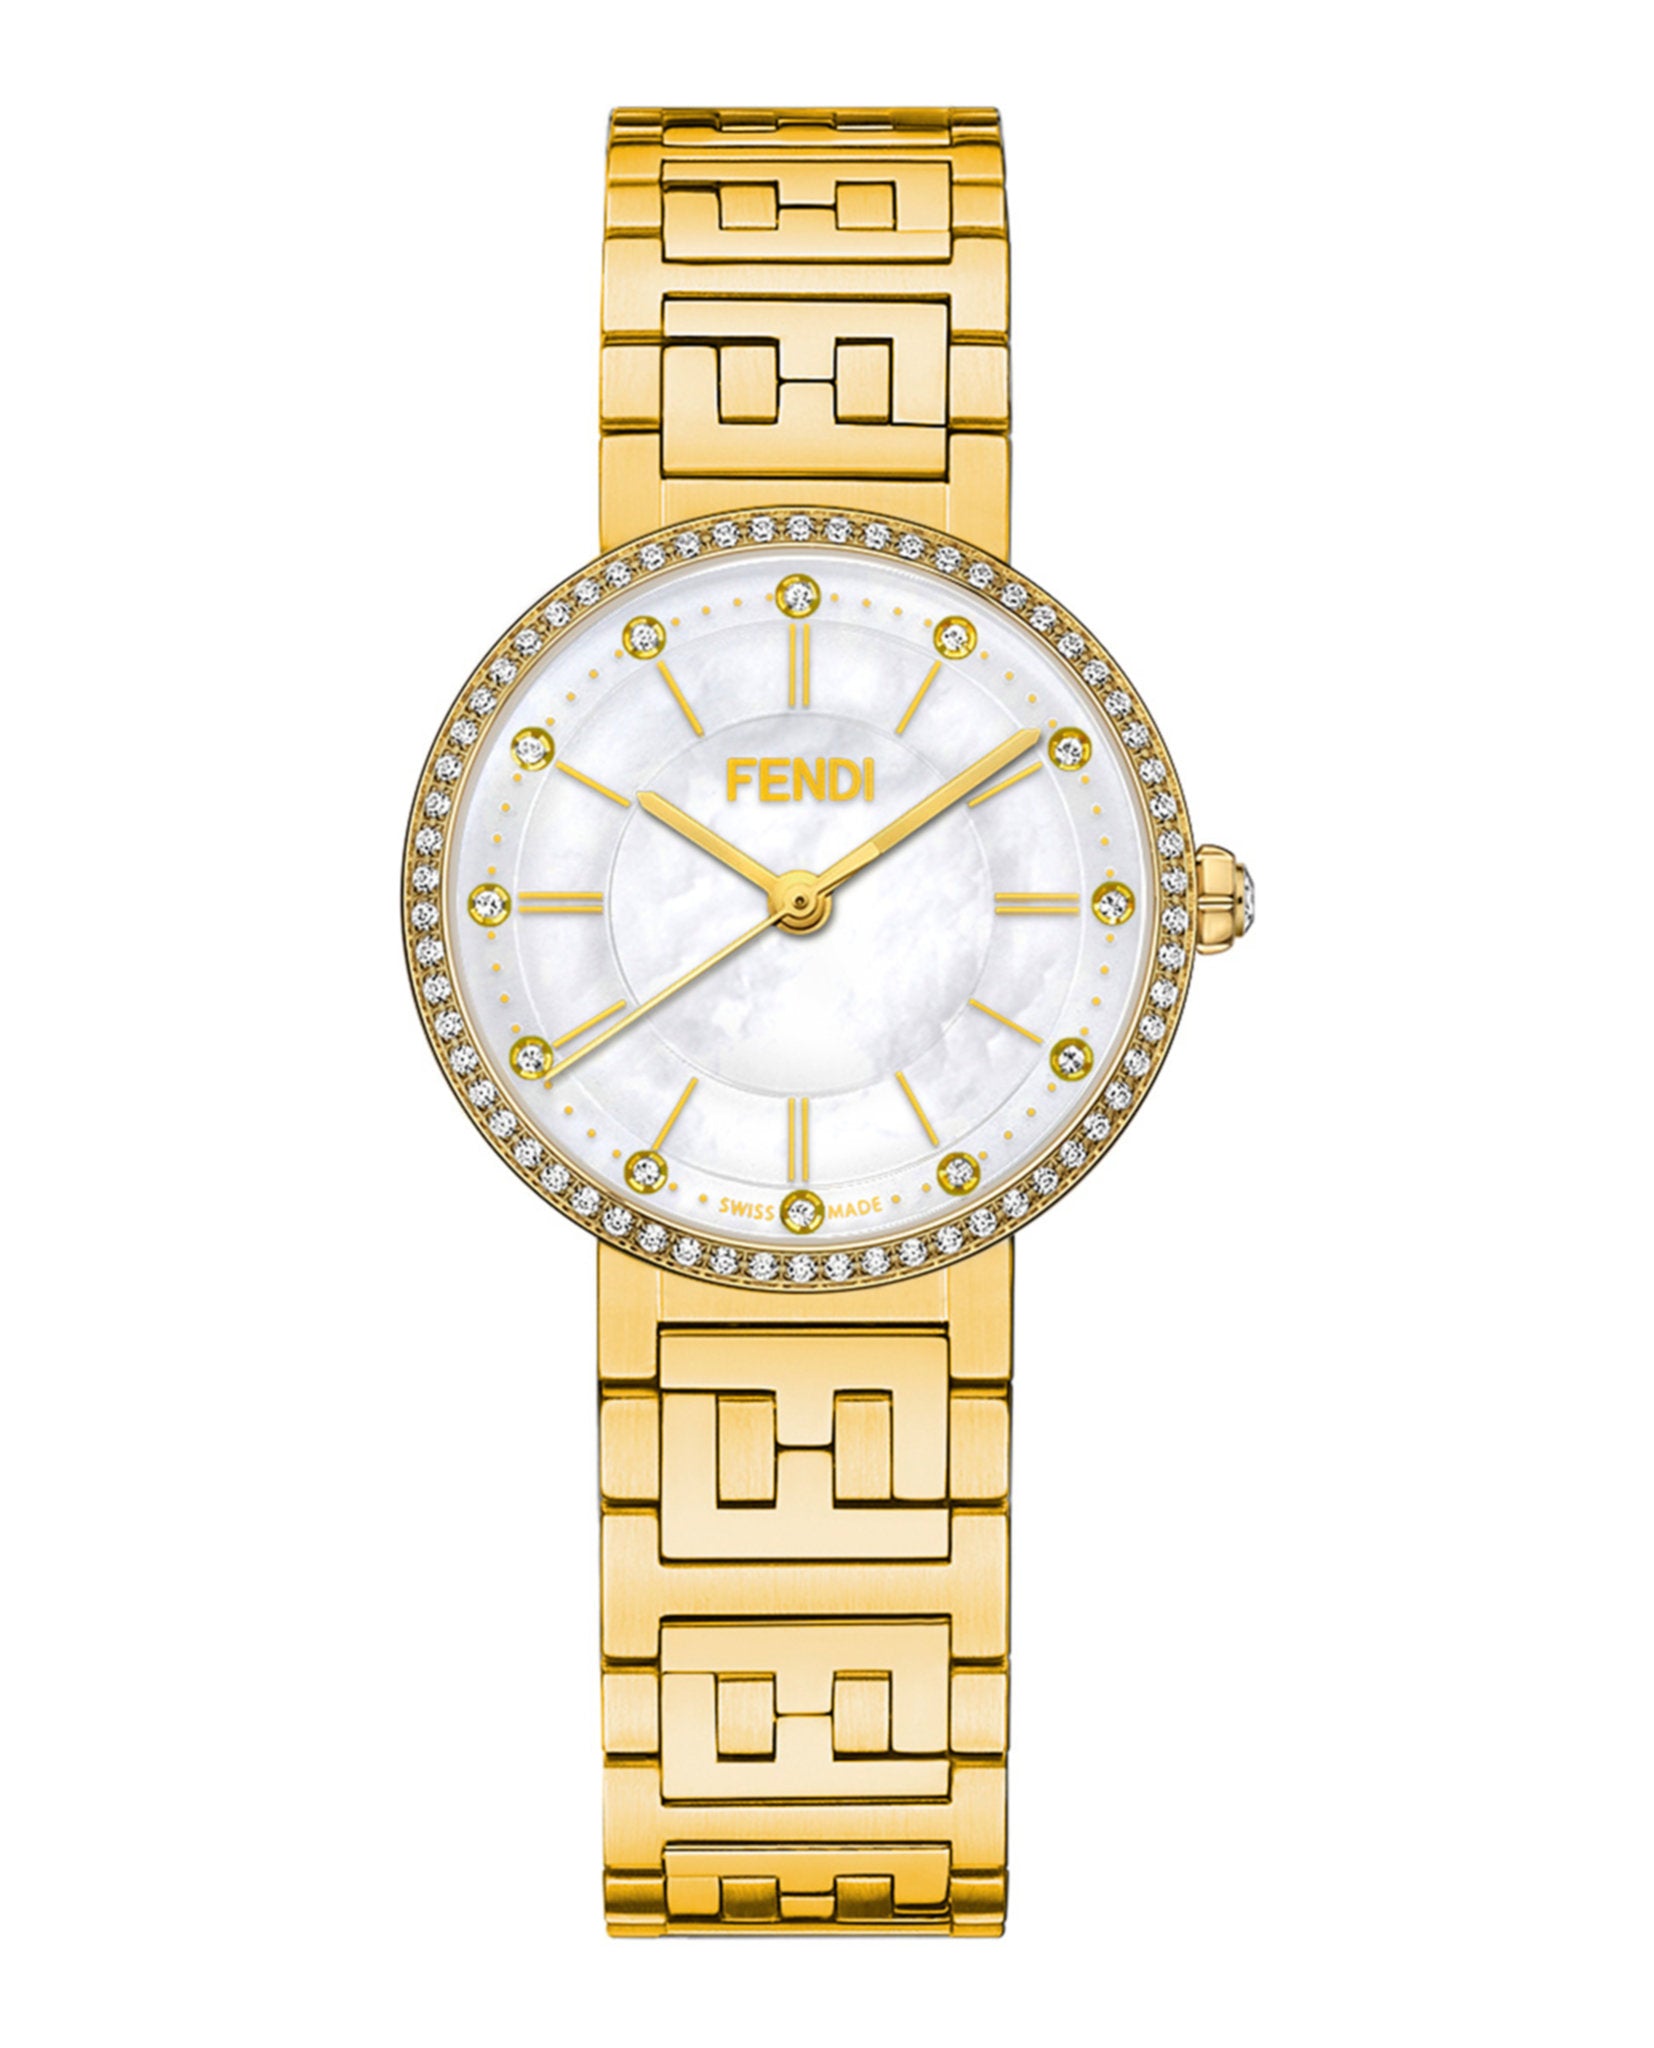 Forever Fendi Watch